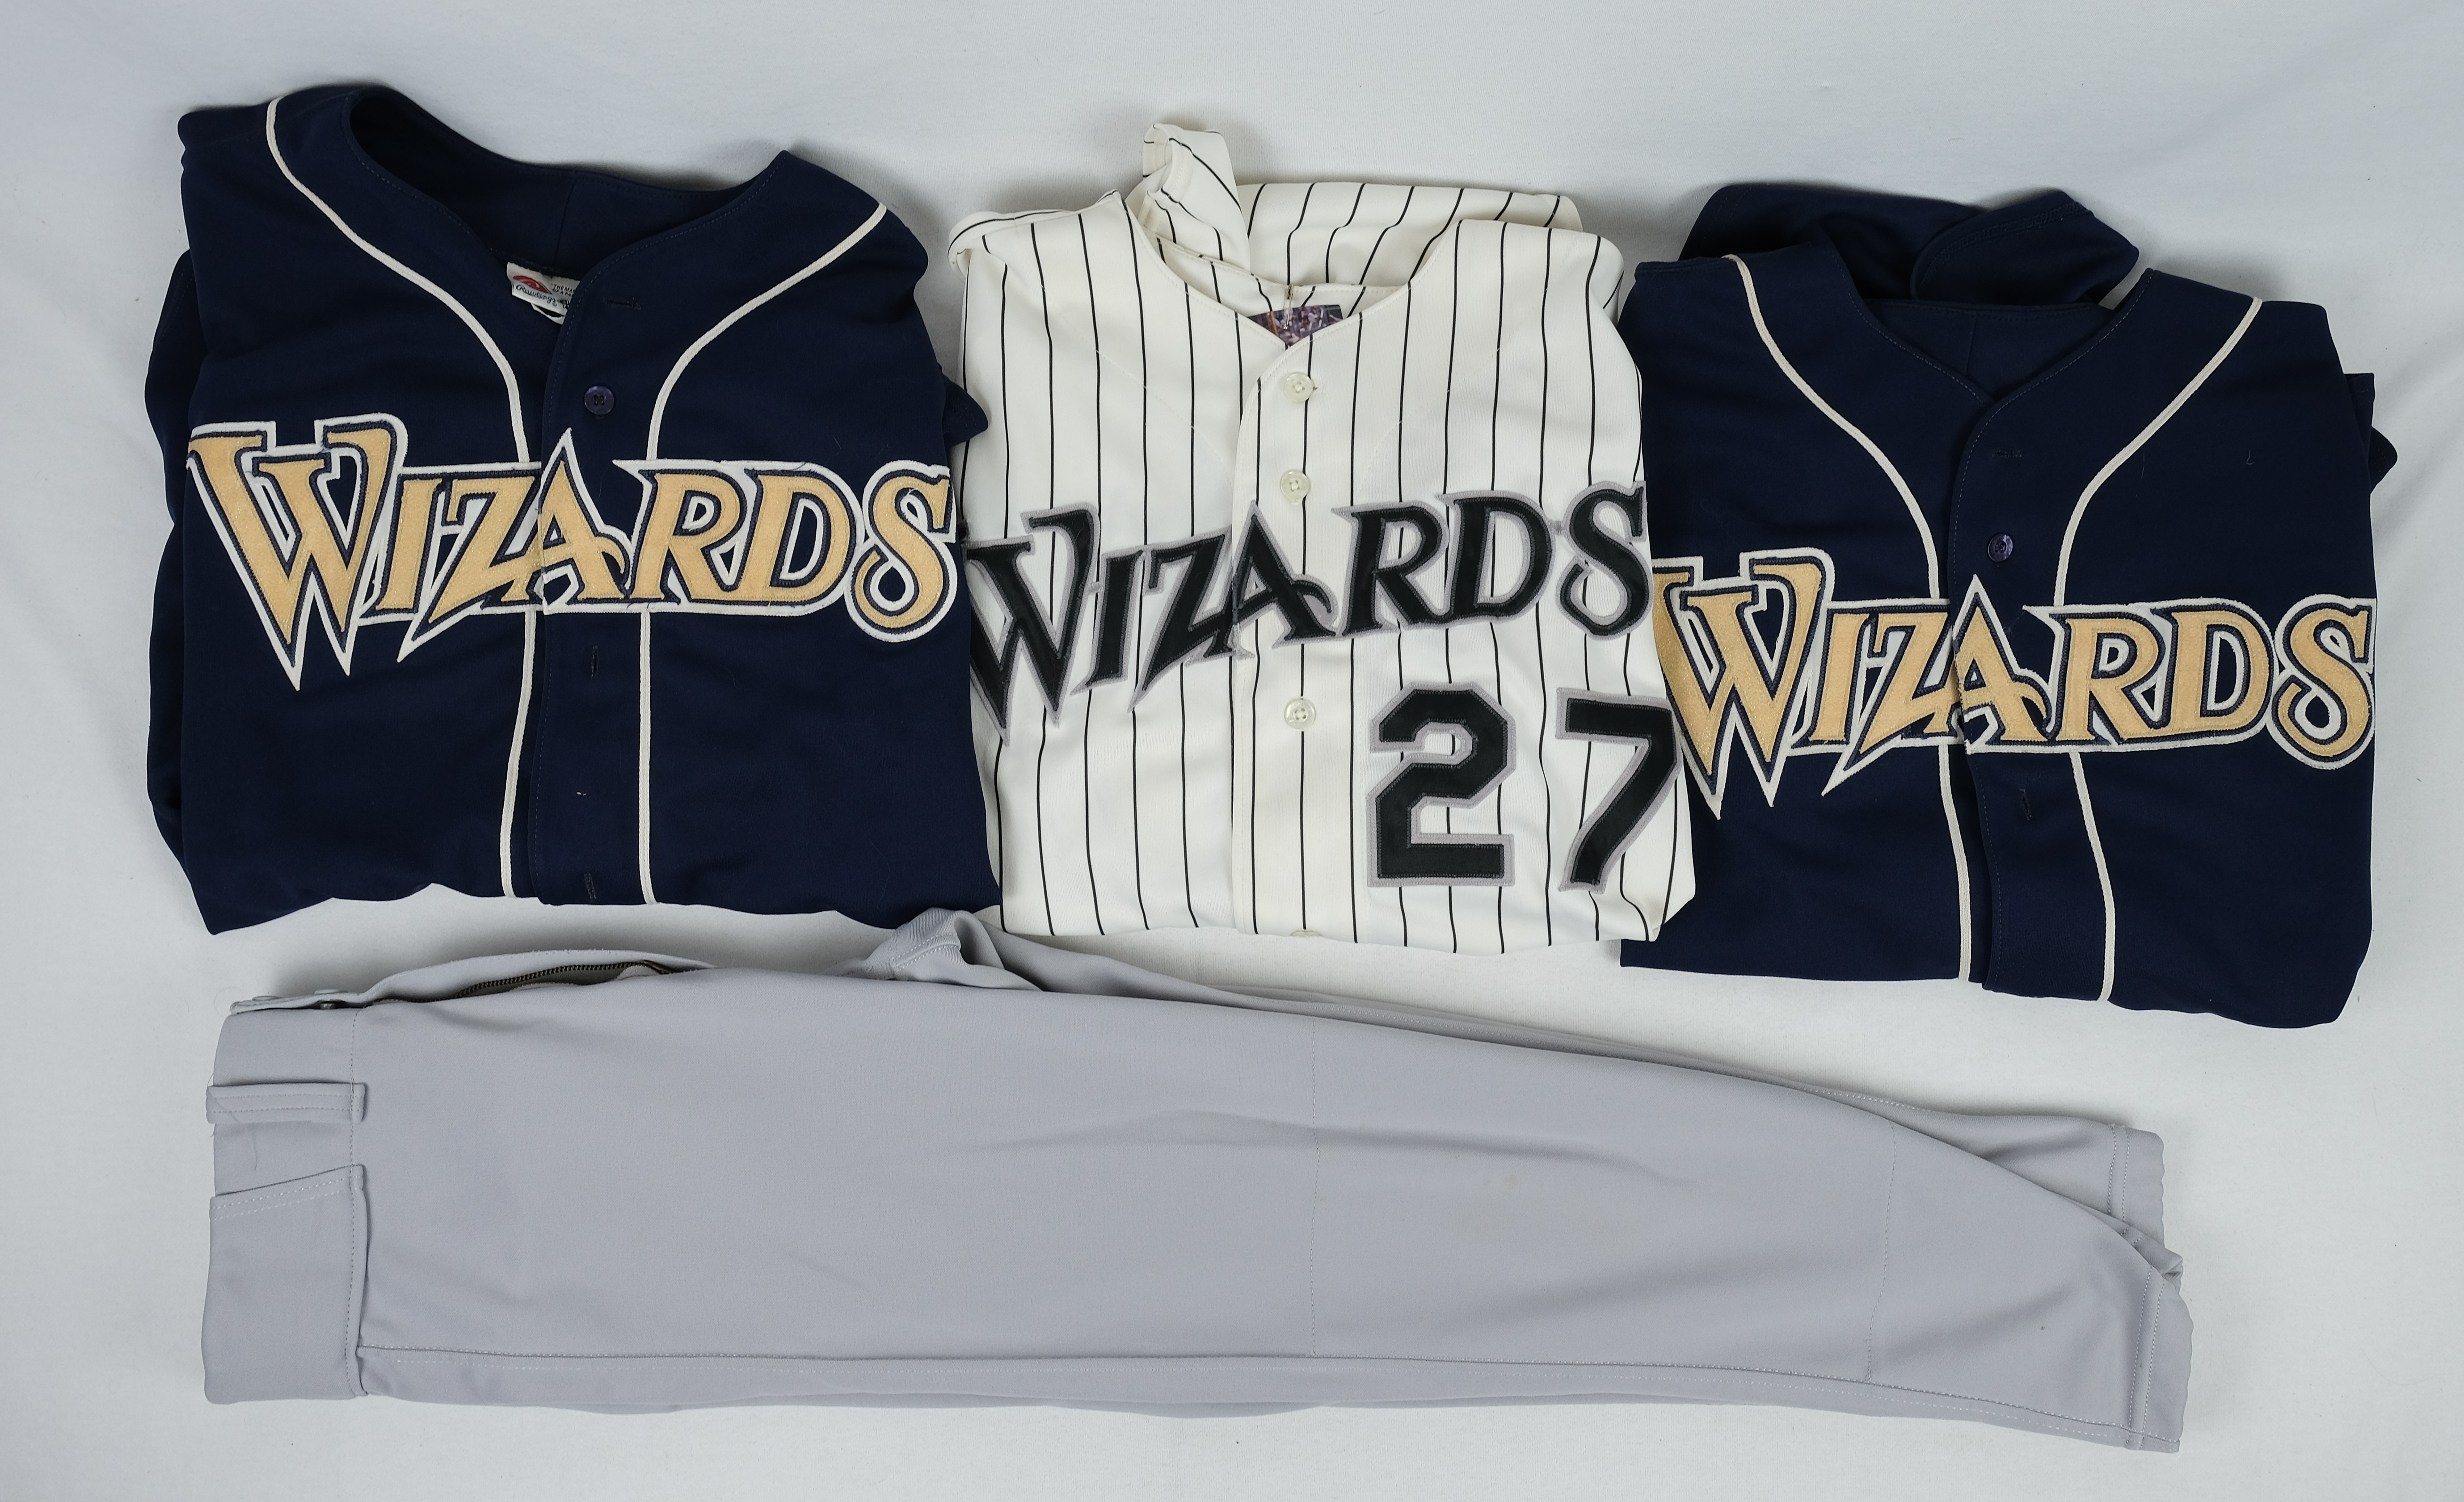 wizards baseball jersey